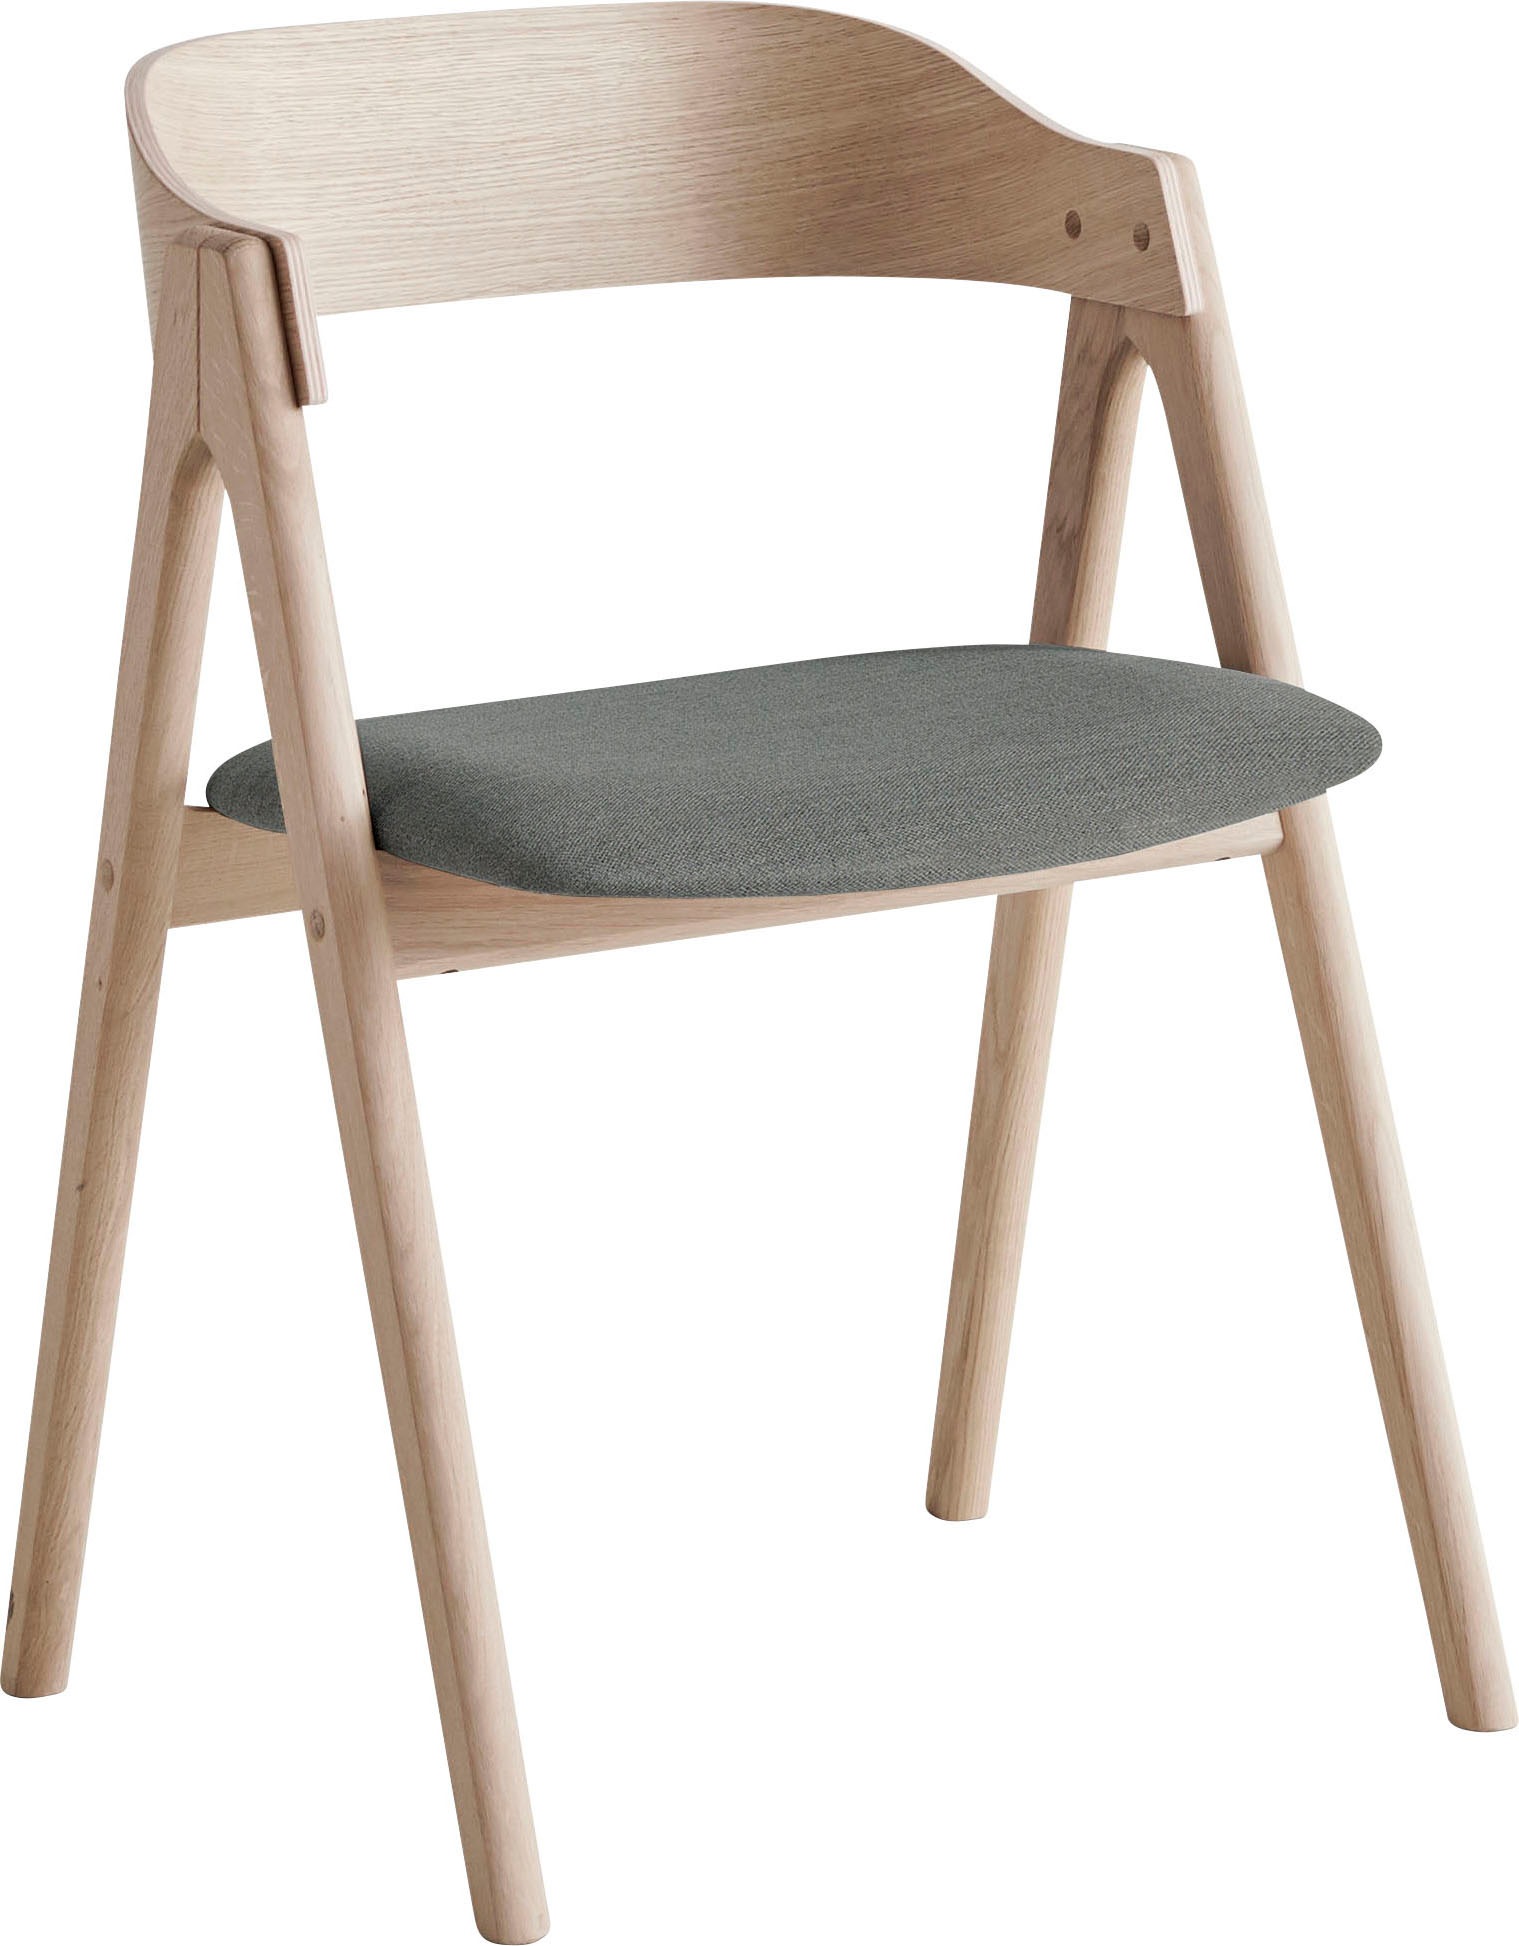 Hammel Furniture Holzstuhl »Findahl by Hammel Mette«, (Set), 2 St., Massivholz, gepolsterte Sitzfläche, versch. Farbvarianten